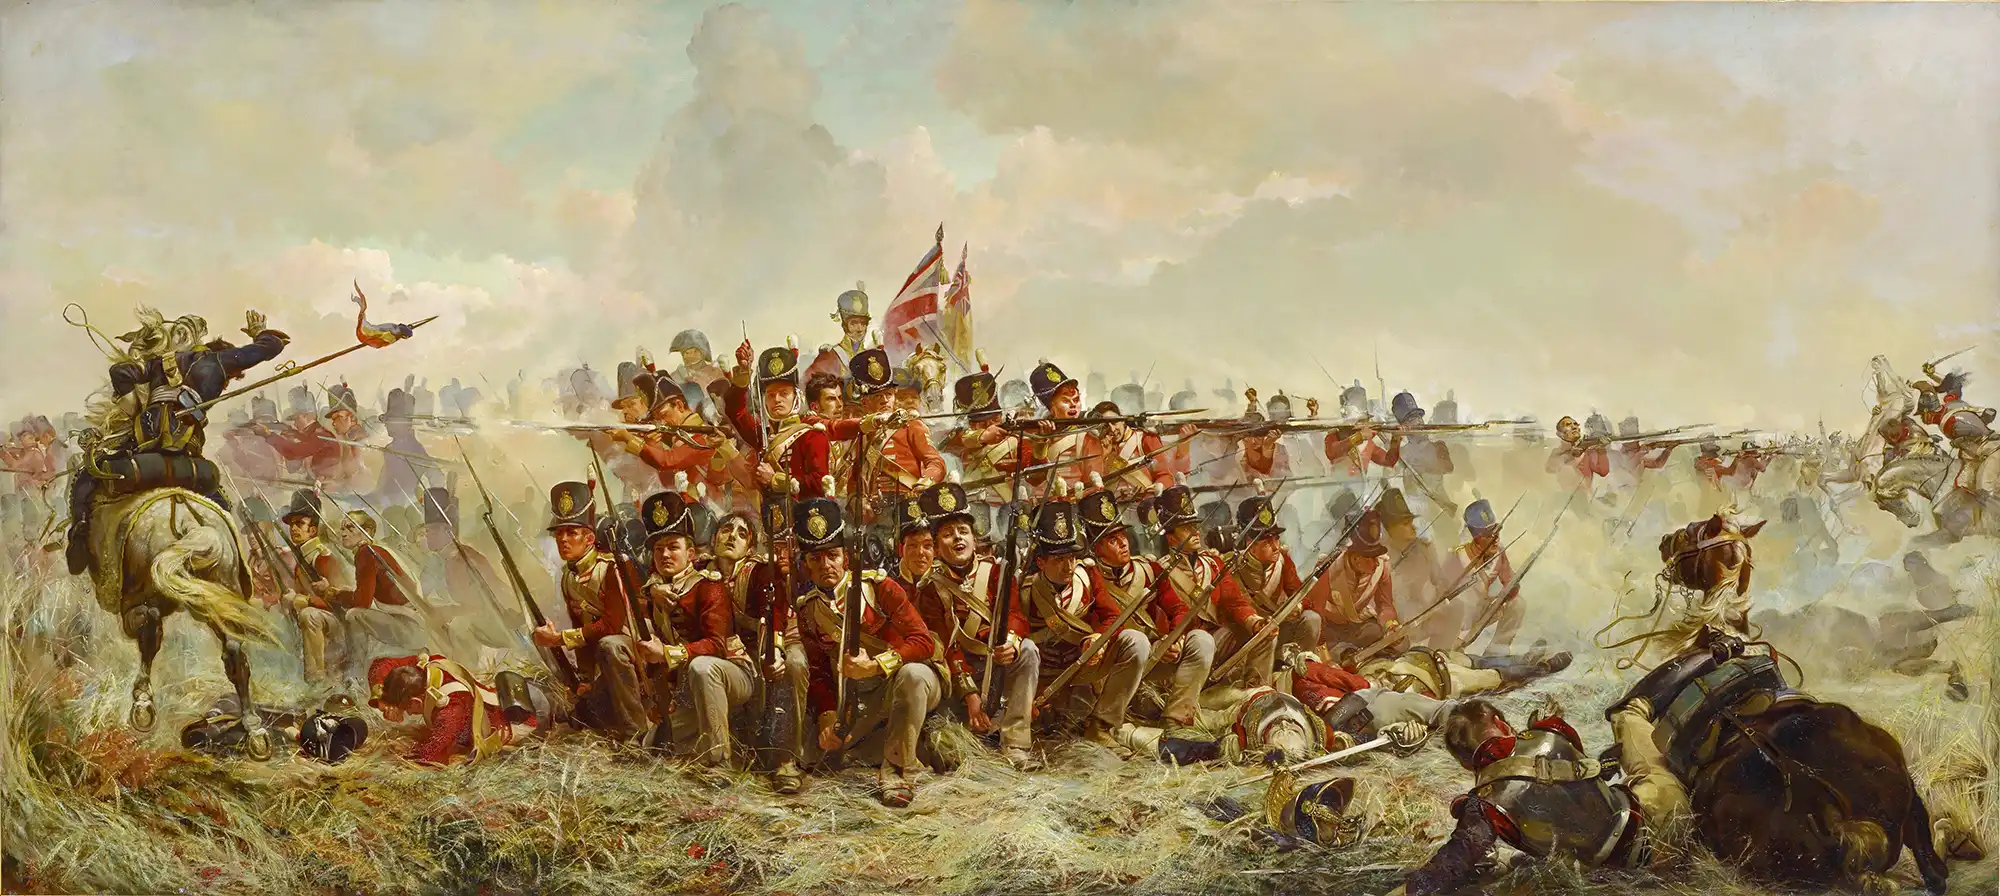 La bataille de Waterloo | Le site de l'Histoire Historyweb -2